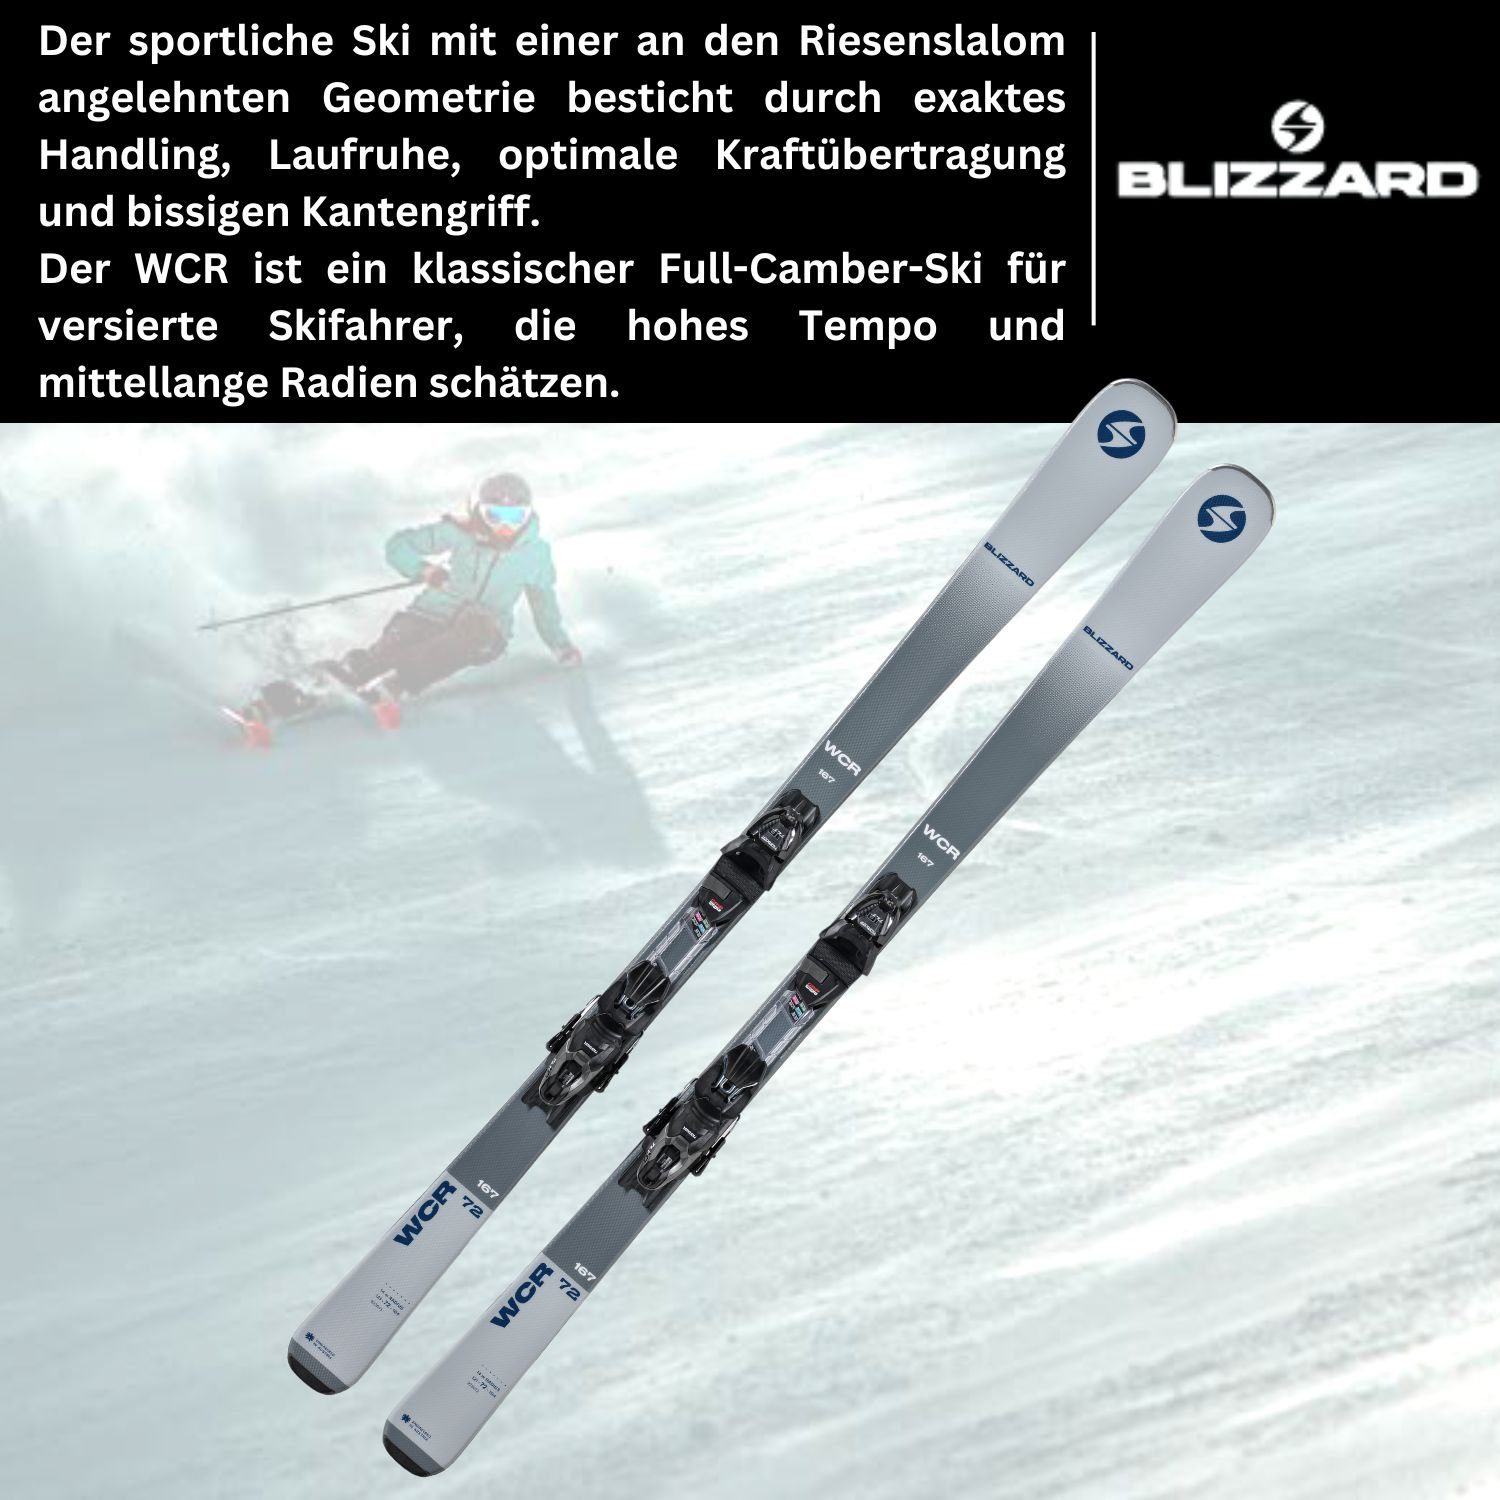 Ski Bindung Z3-10 Ski, BLIZZARD grau/blau 10 Rocker + Blizzard TLT Marker Camber Full WCR